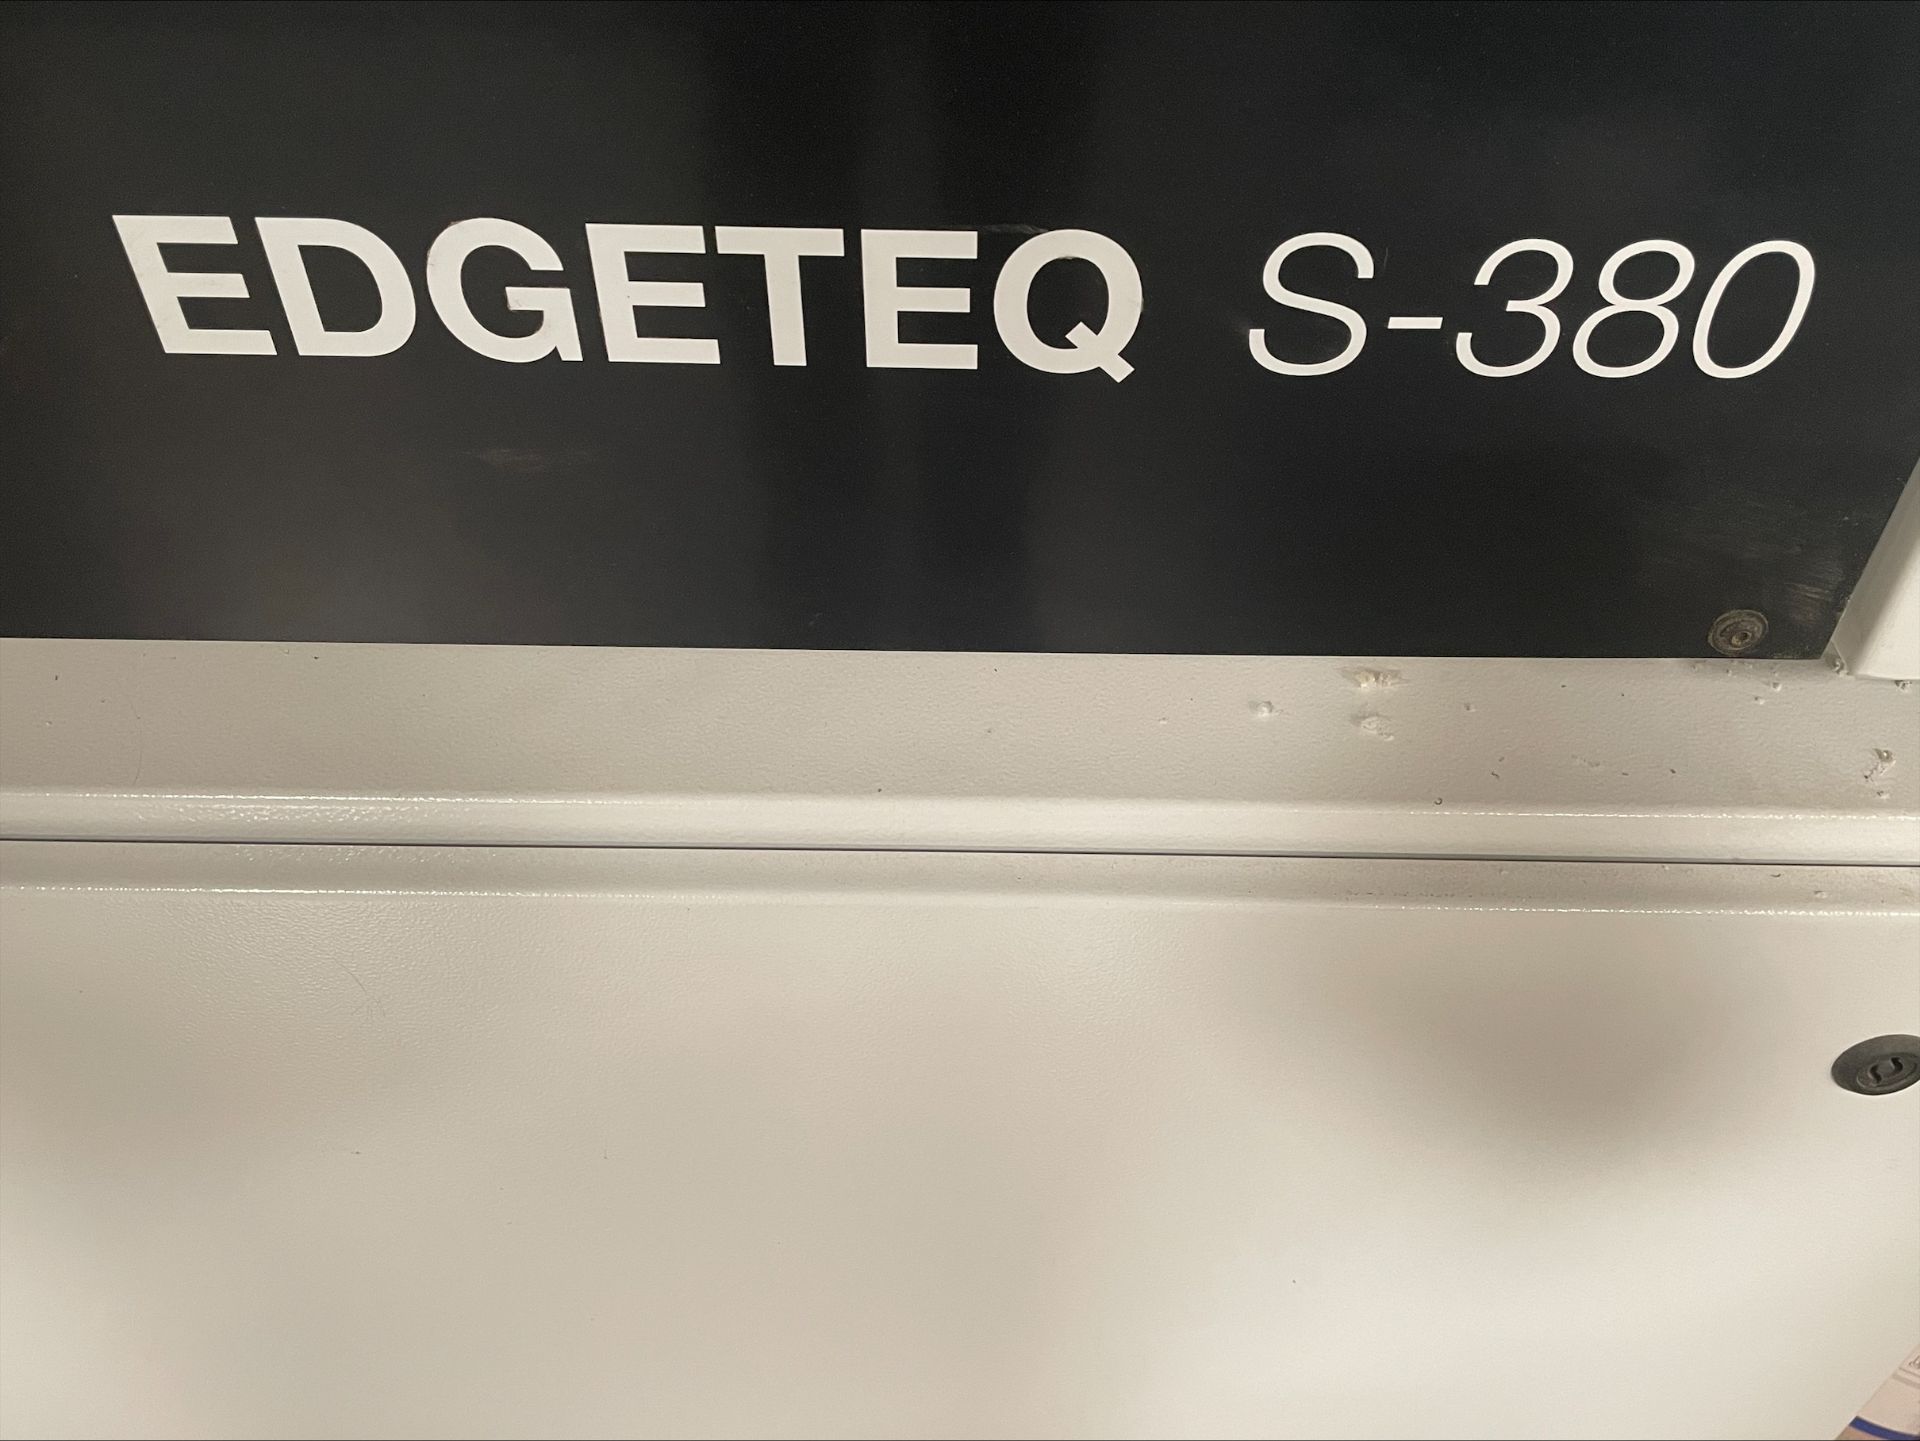 Homag Edgeteq S-380 Profiline (PROFILINE KDF 660) single sided edge bander, Serial No. 0-261-73-8763 - Image 3 of 8